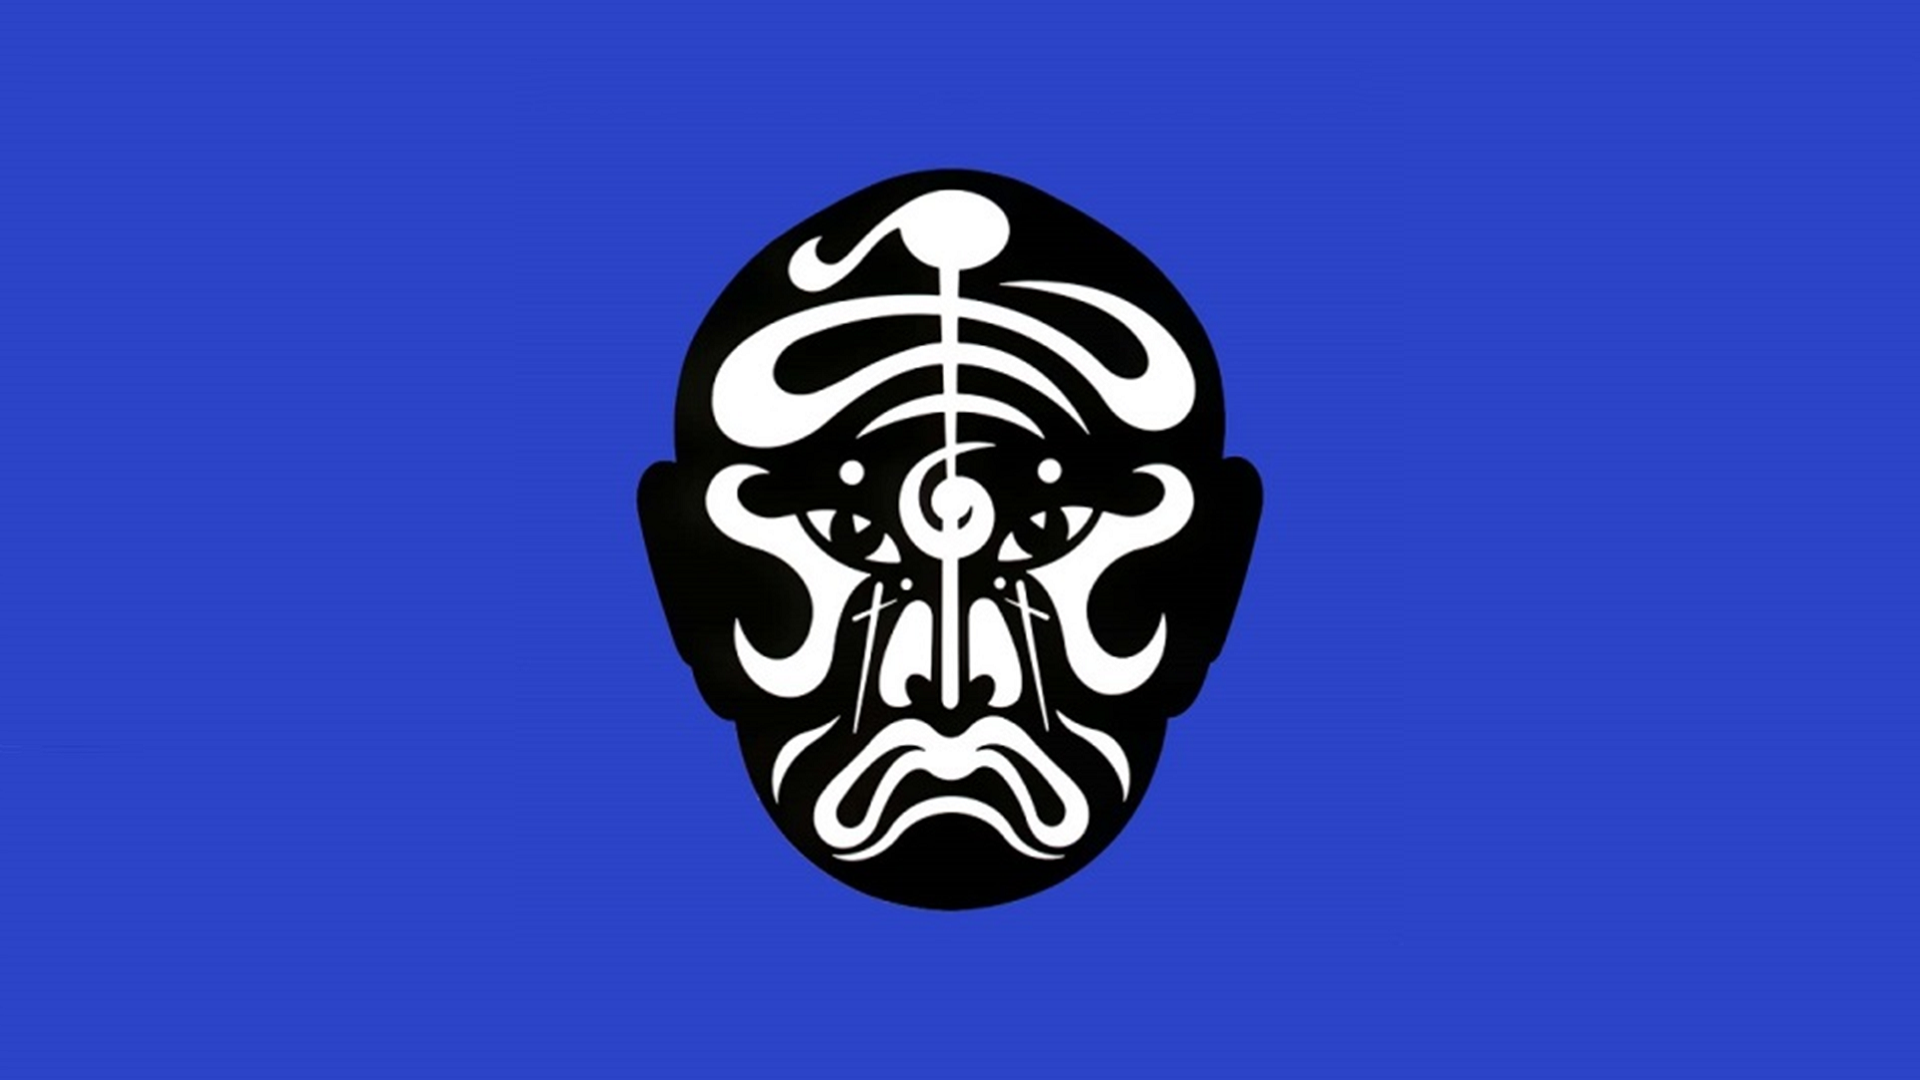 General 1920x1080 Jean Michel Jarre electronic music music minimalism blue background face logo